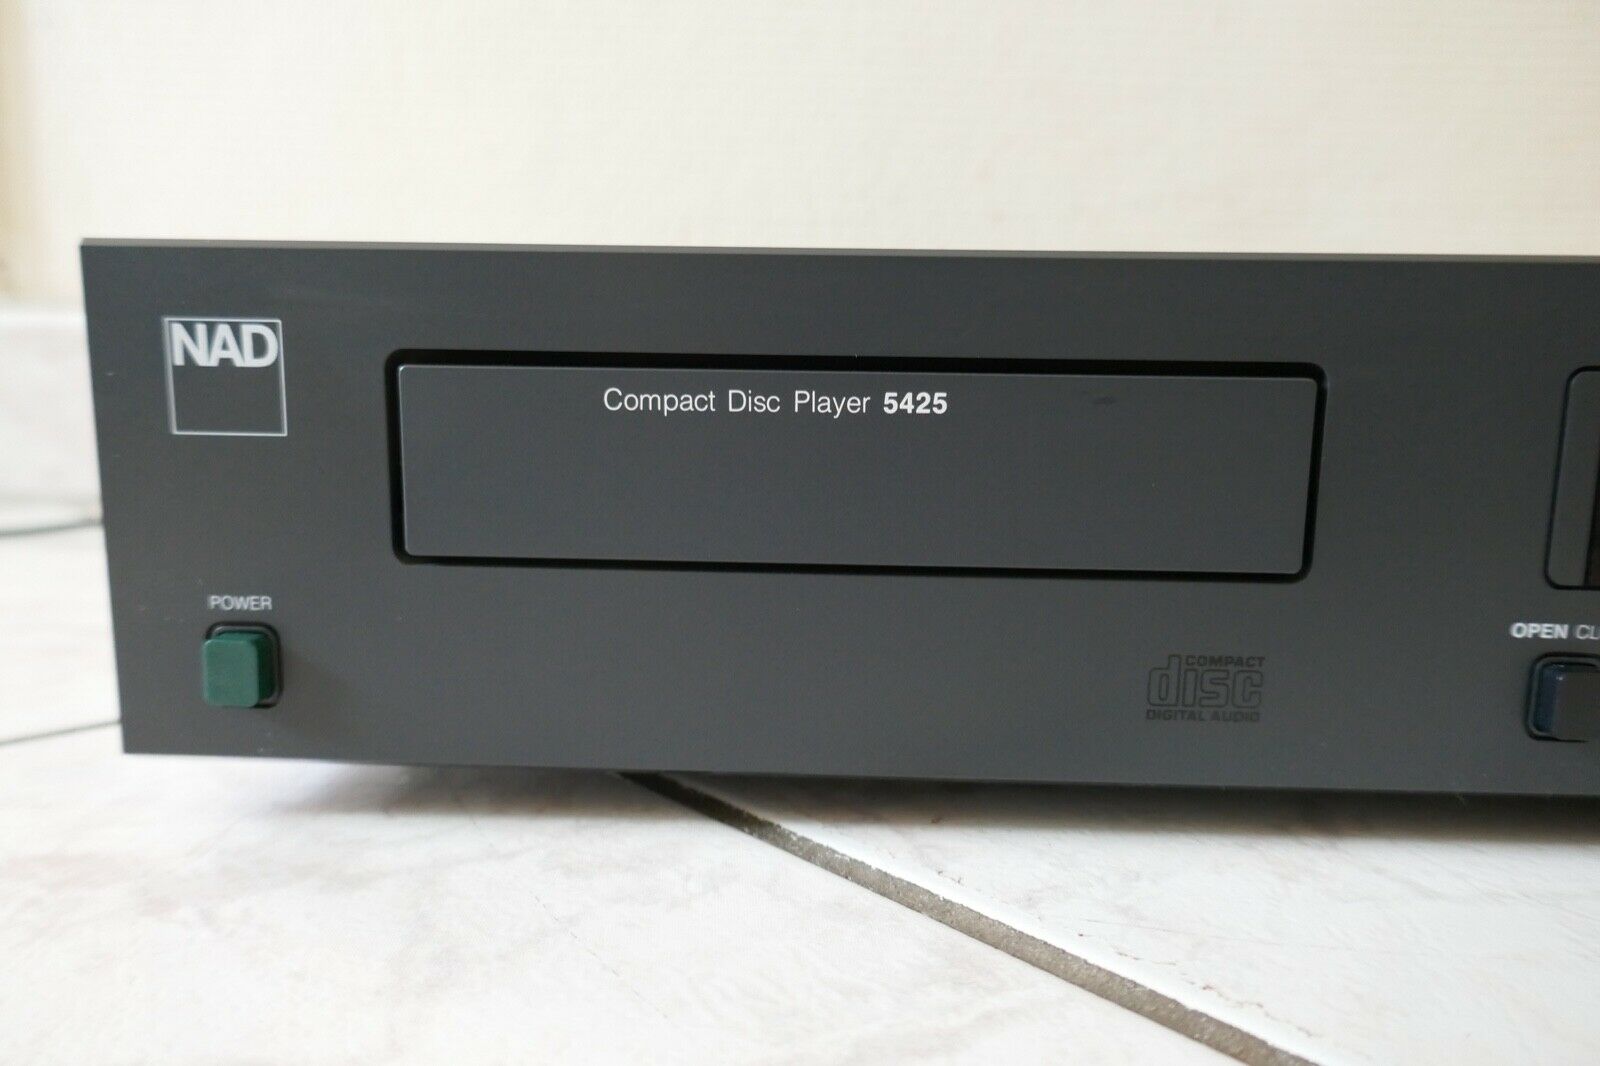 lecteur compact disc player cd nad 5425 vintage occasion